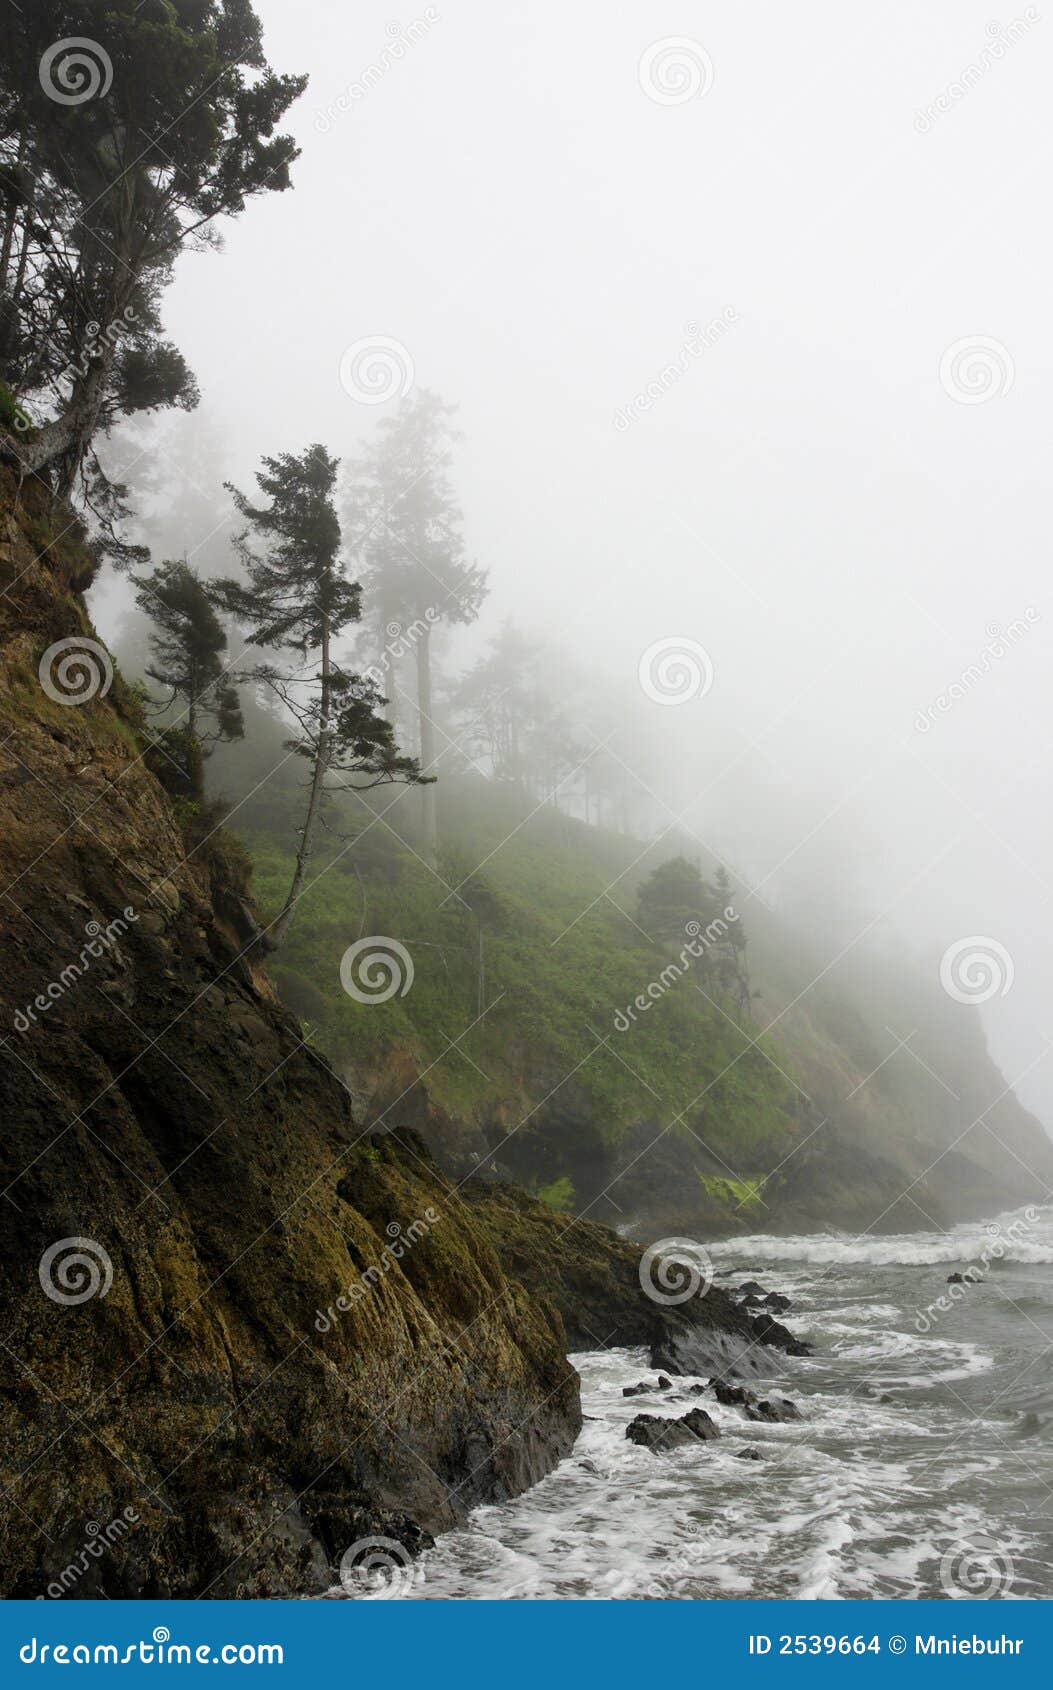 pacific coast rocky rugged shoreline in misty fog